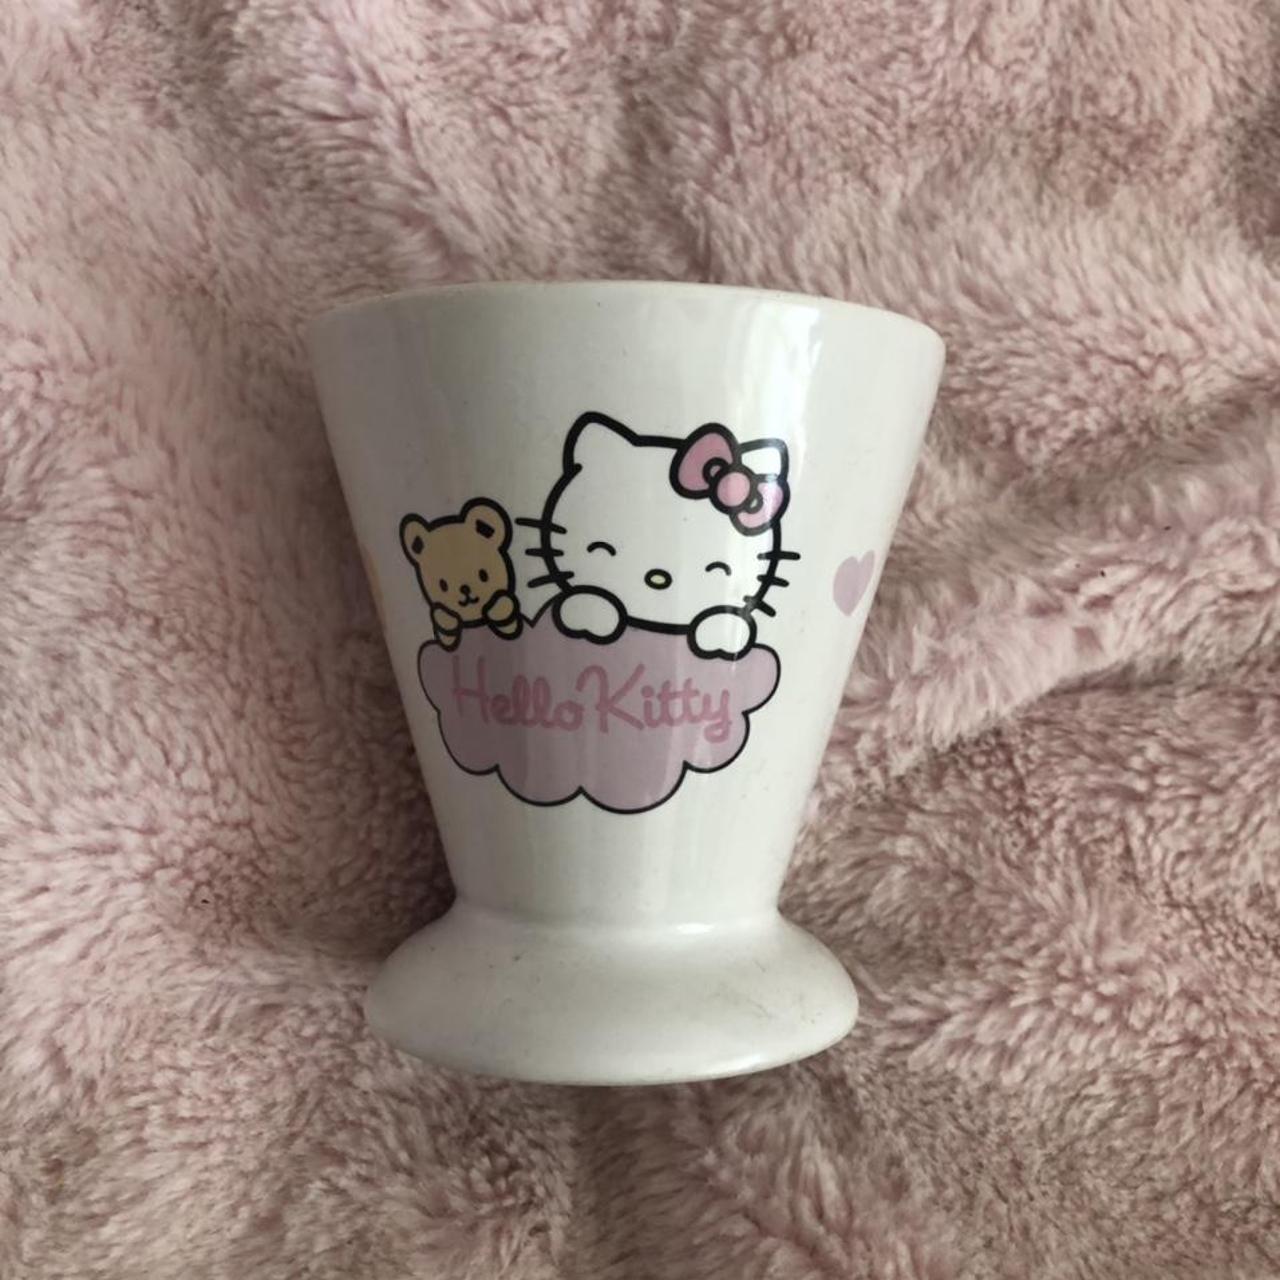 Product Image 1 - Sanrio hello kitty pot comes